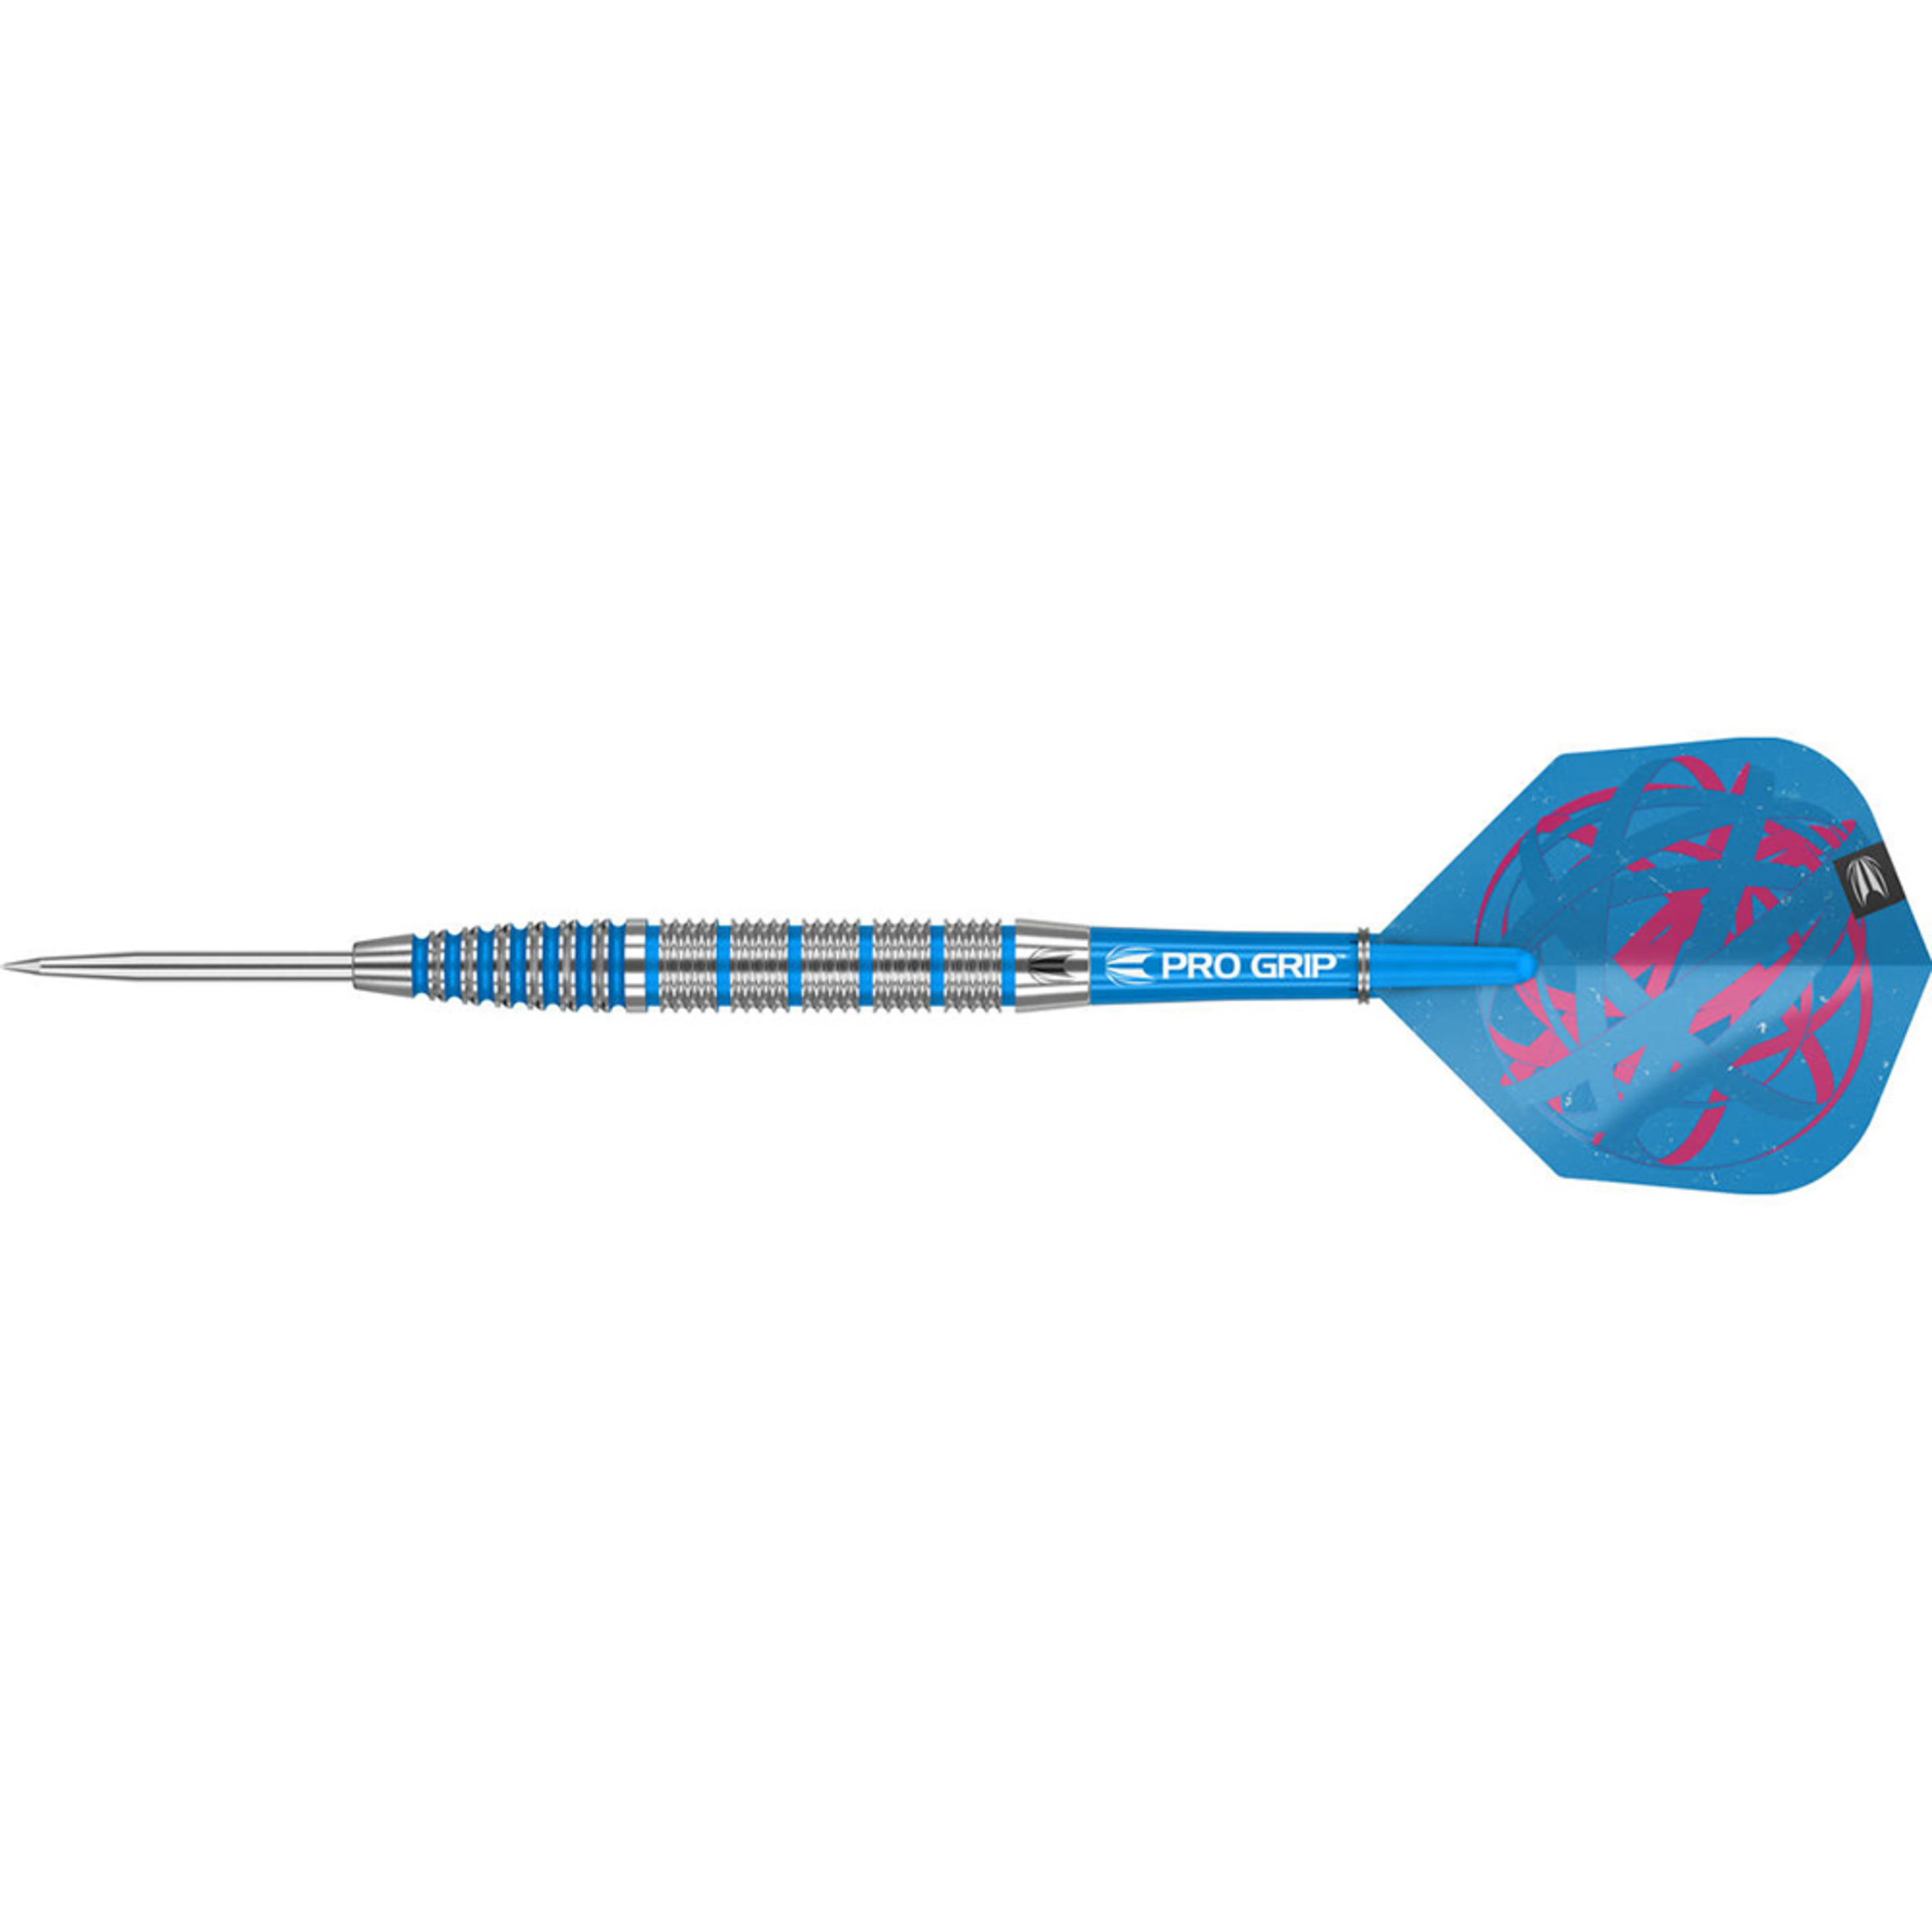 Dardos Target Darts Orb 02 80% 22g 190088 - Azul - Dardos Target Darts Orb 02 80% 22g  MKP